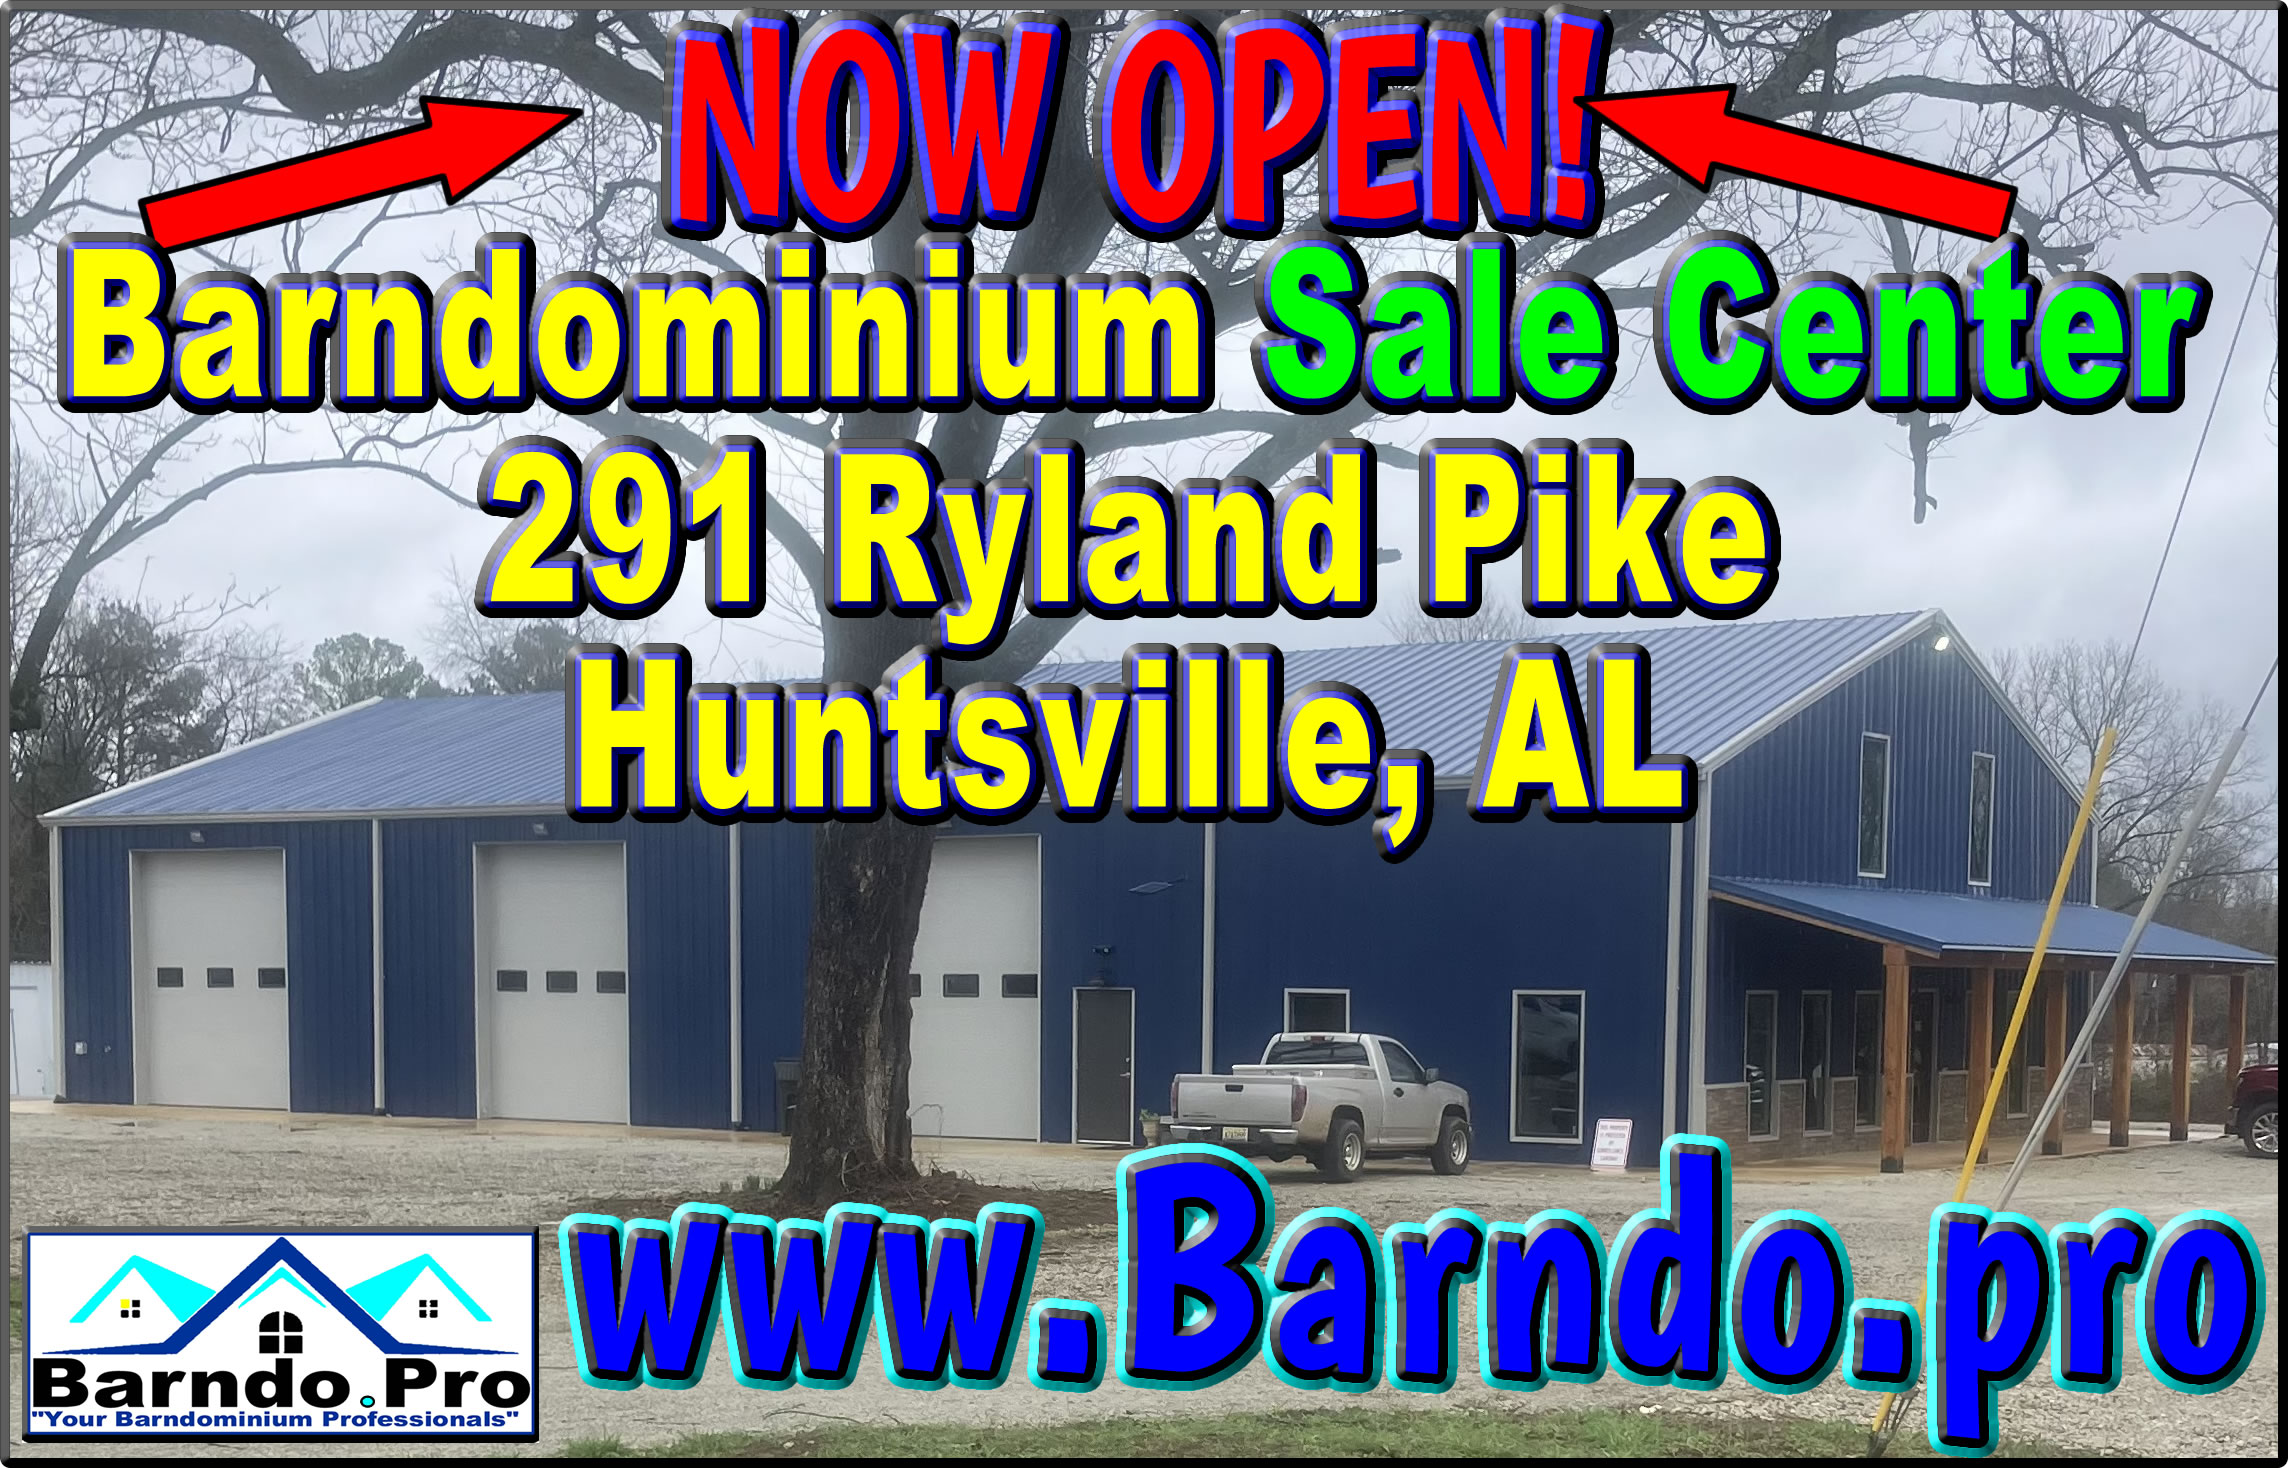 Barndo Pro Barndominium Sale Center Now Open in Huntsville Alabama